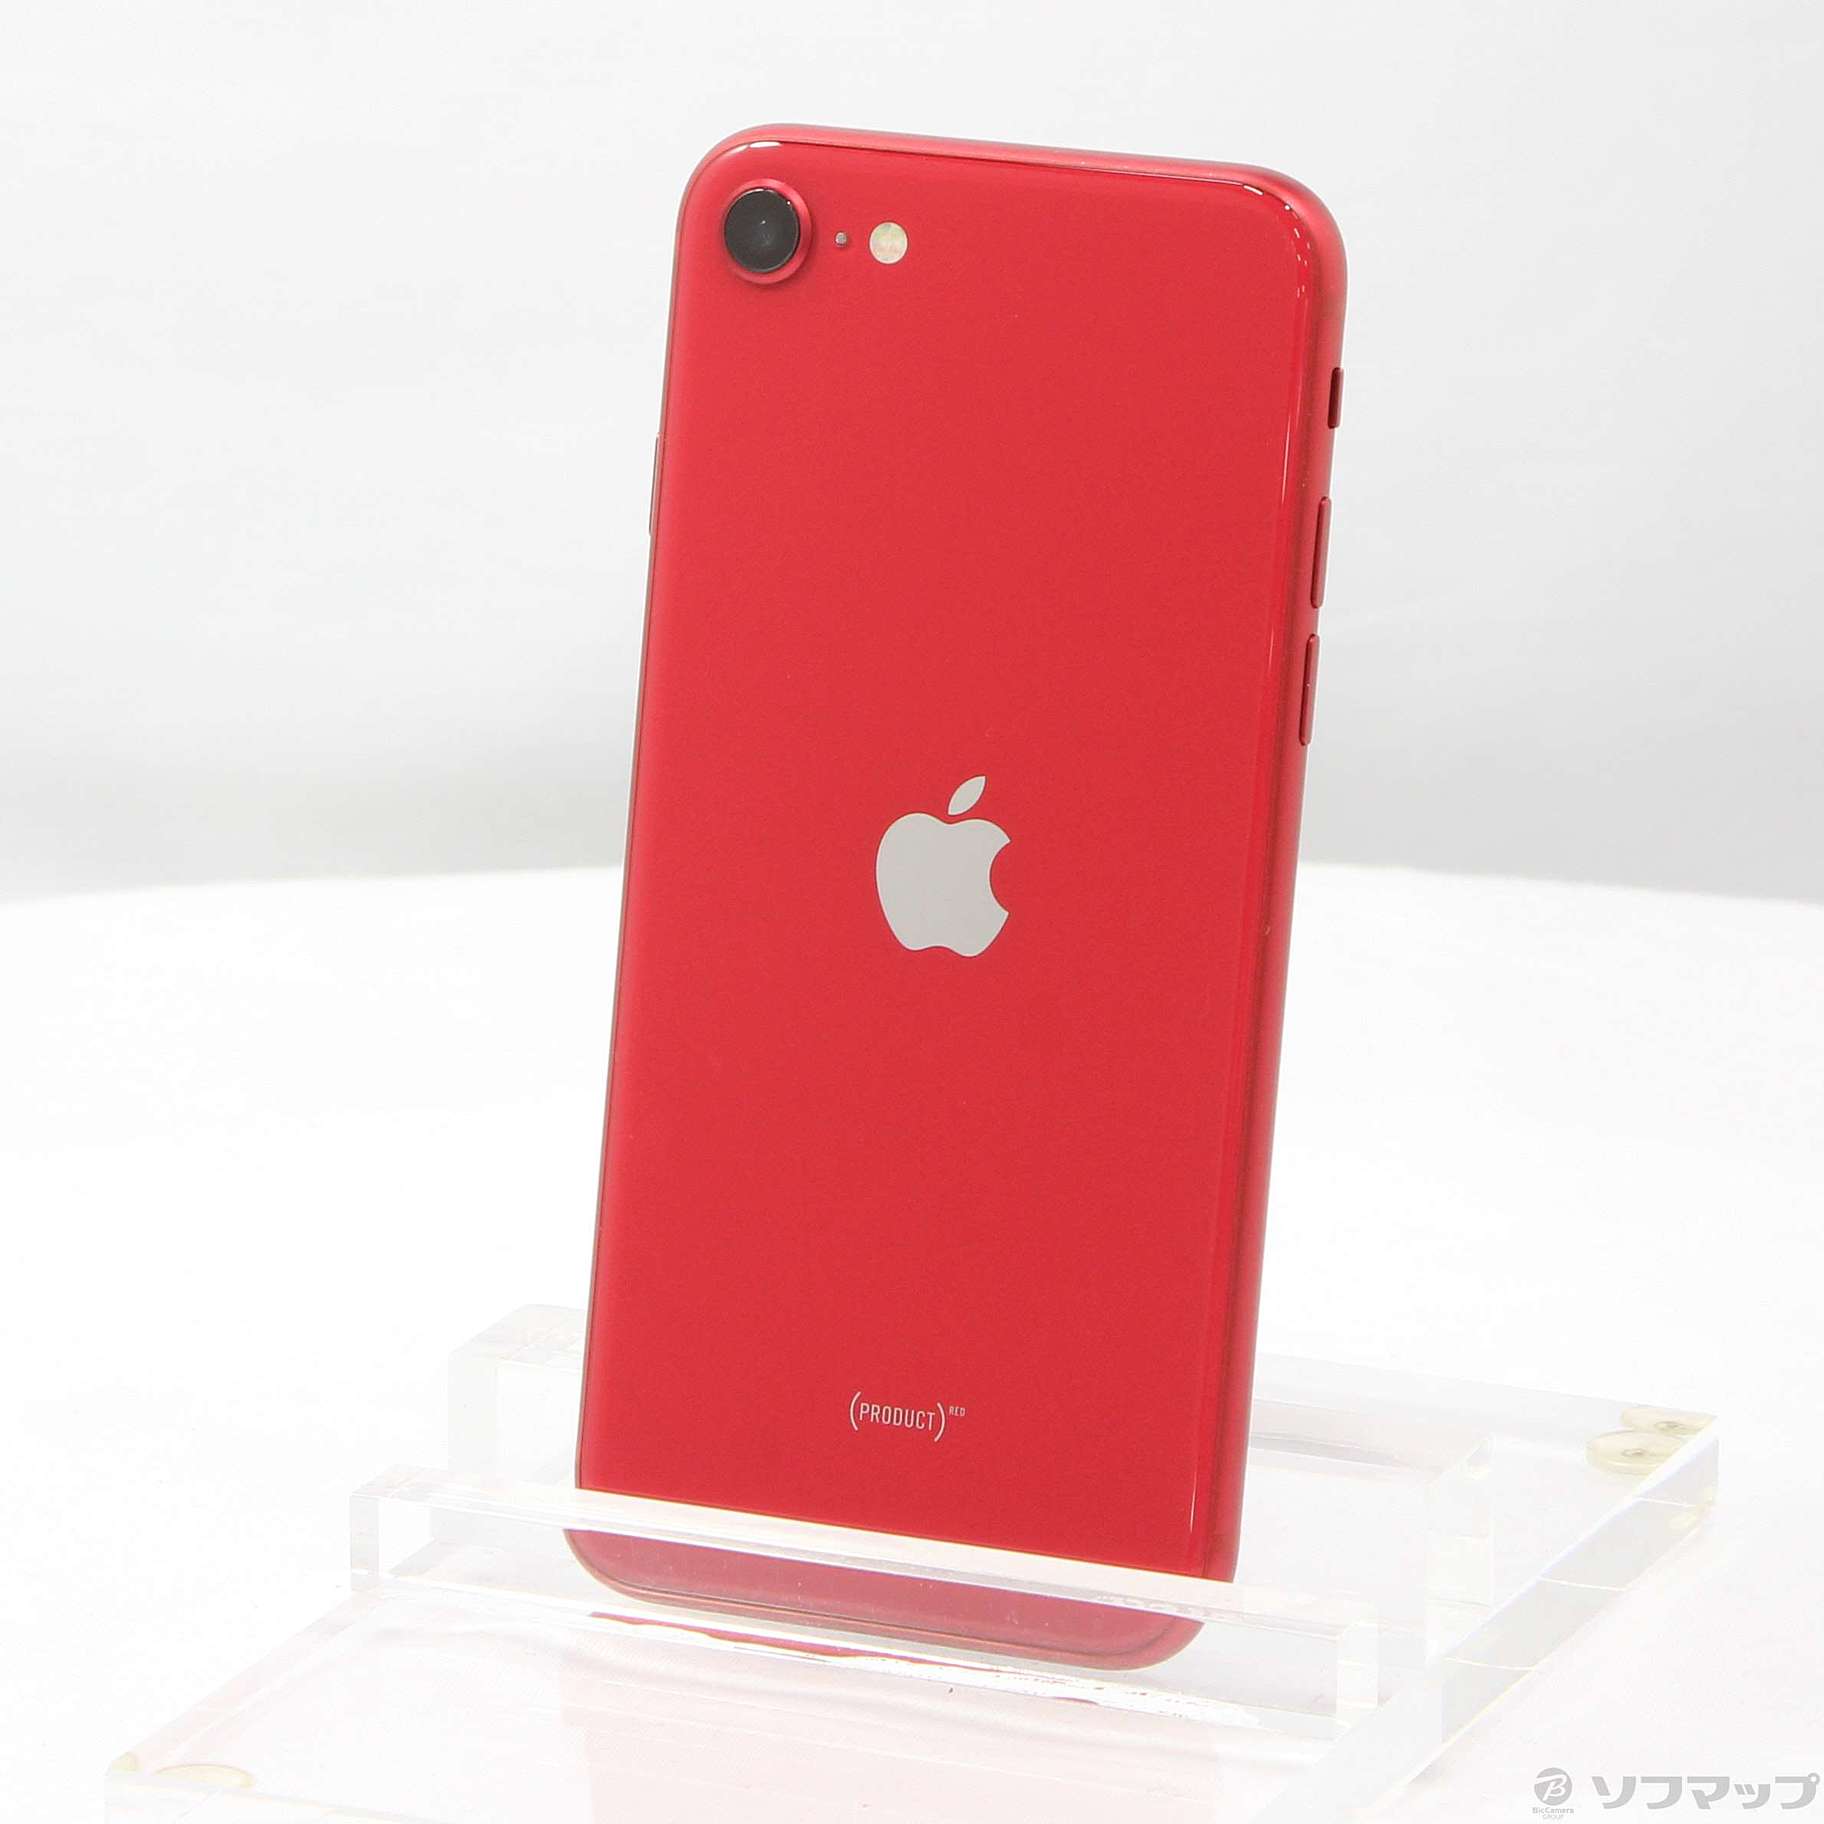 iPhone SE (第2世代) (PRODUCT)RED 128GB SIMフリー [レッド] 中古(白 ...